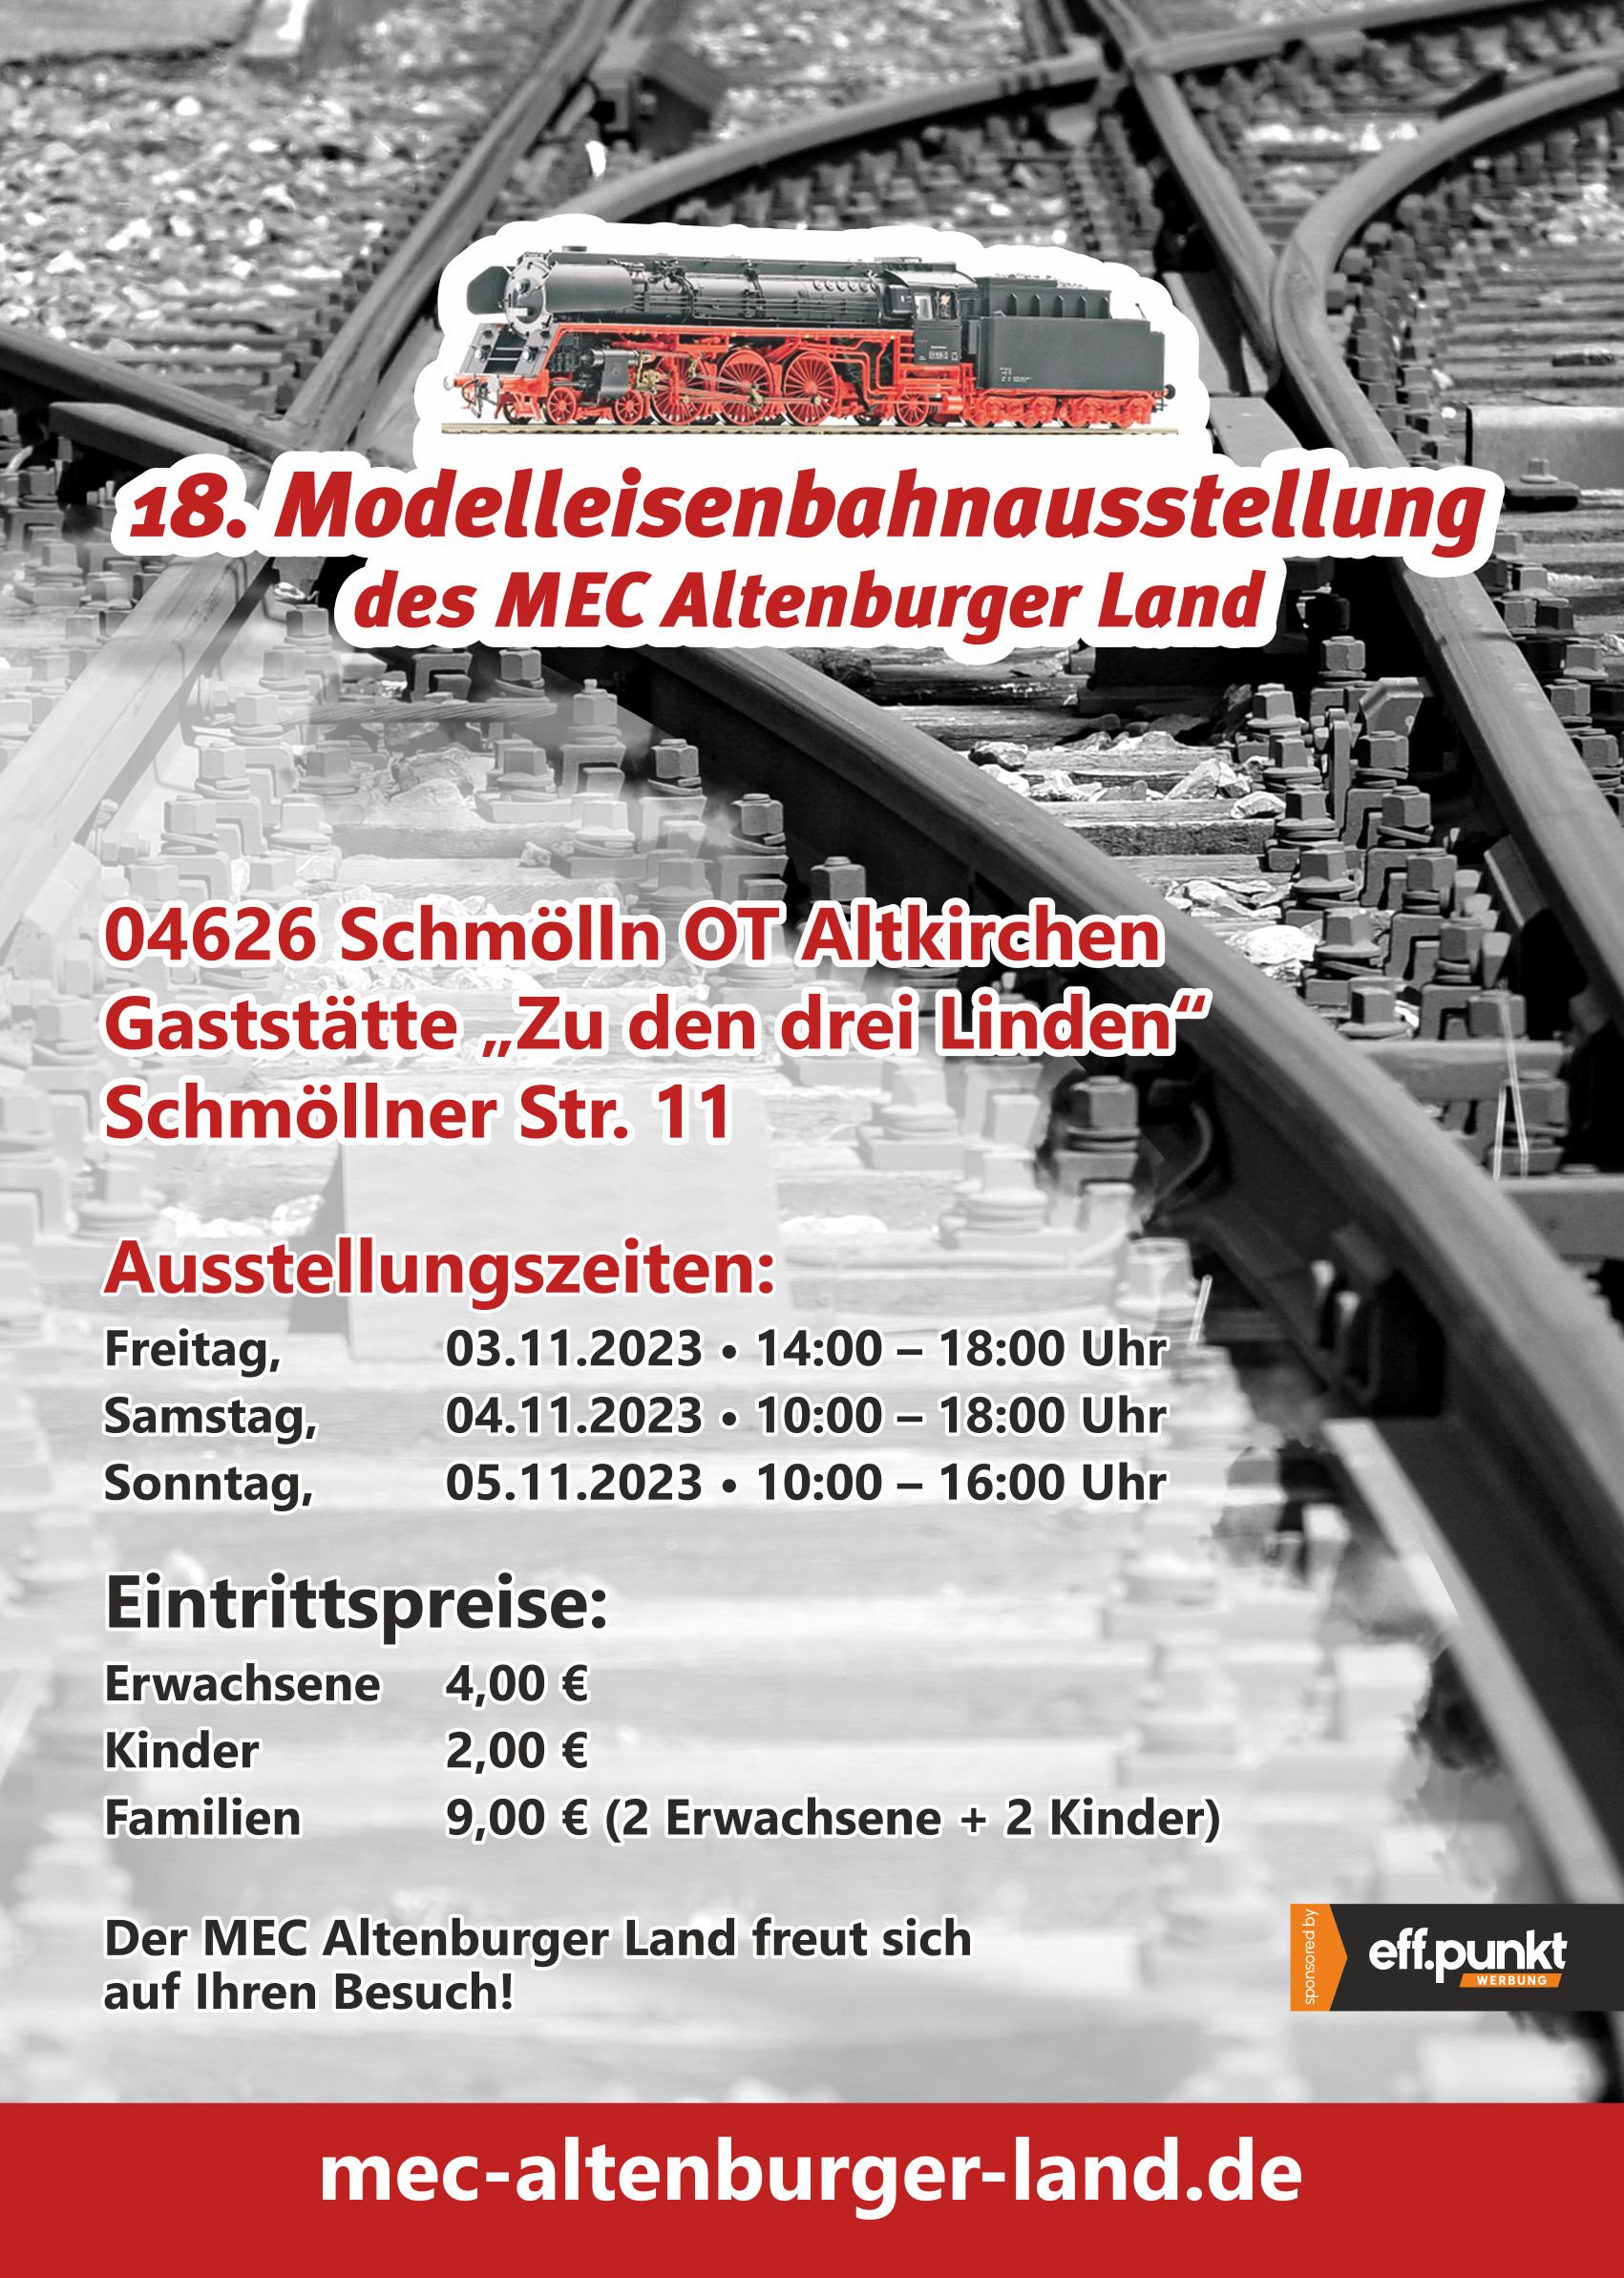 18. Modelleisenbahnausstellung des MEC Altenburger Land e.V.